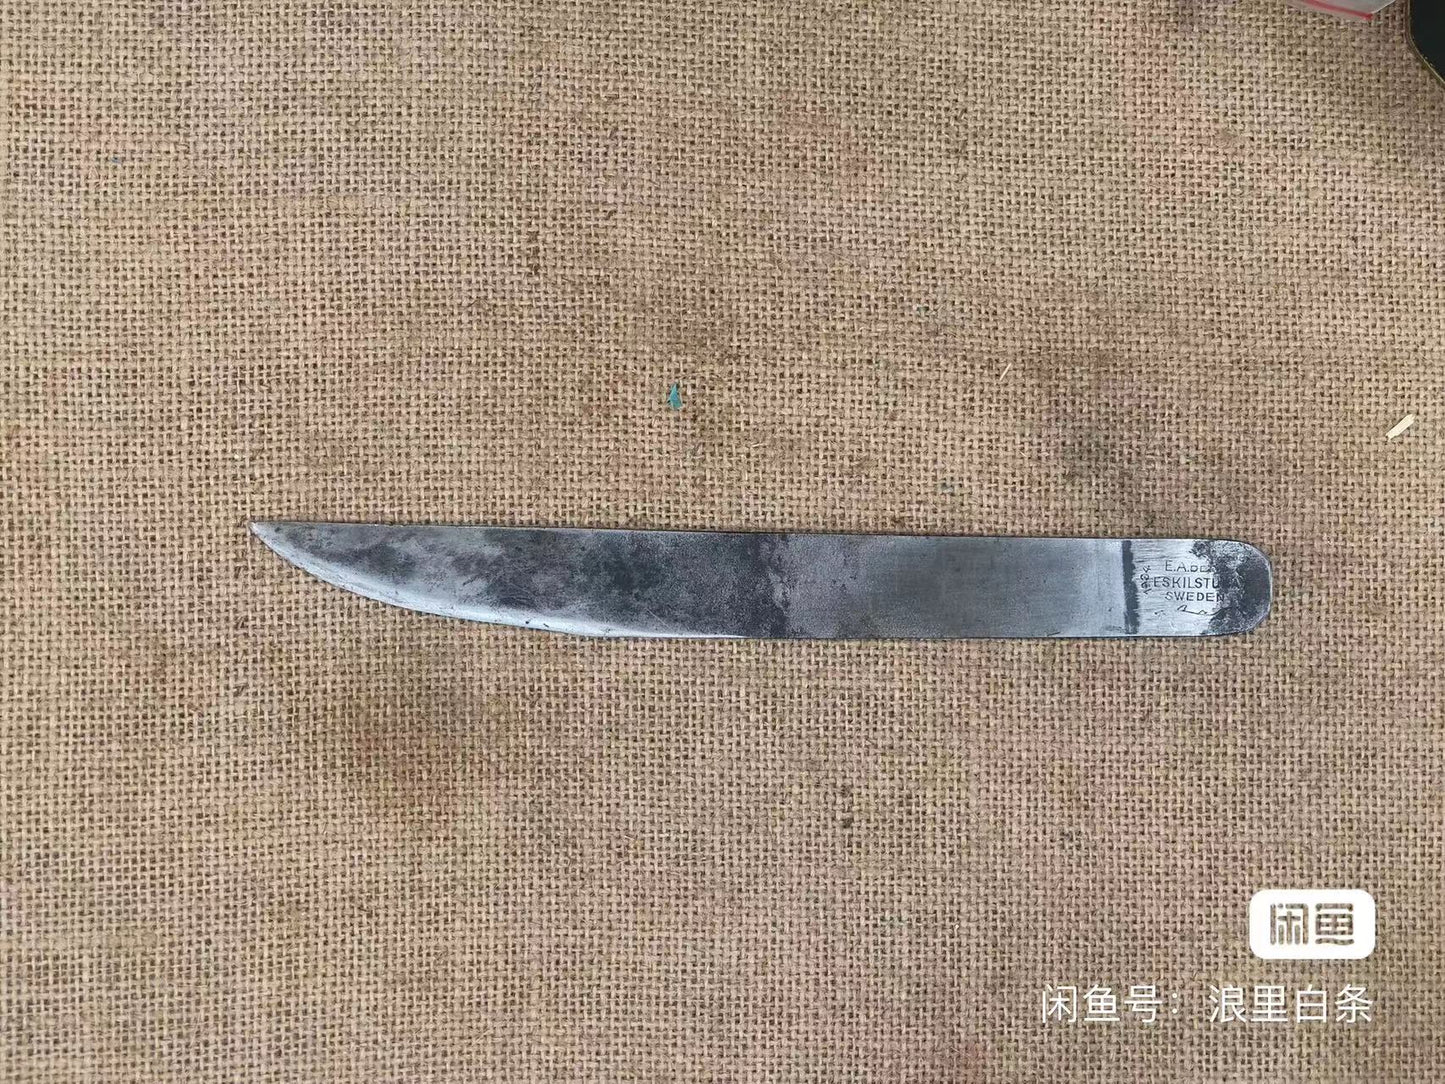 Erik Anton Berg Shoemaker's knife